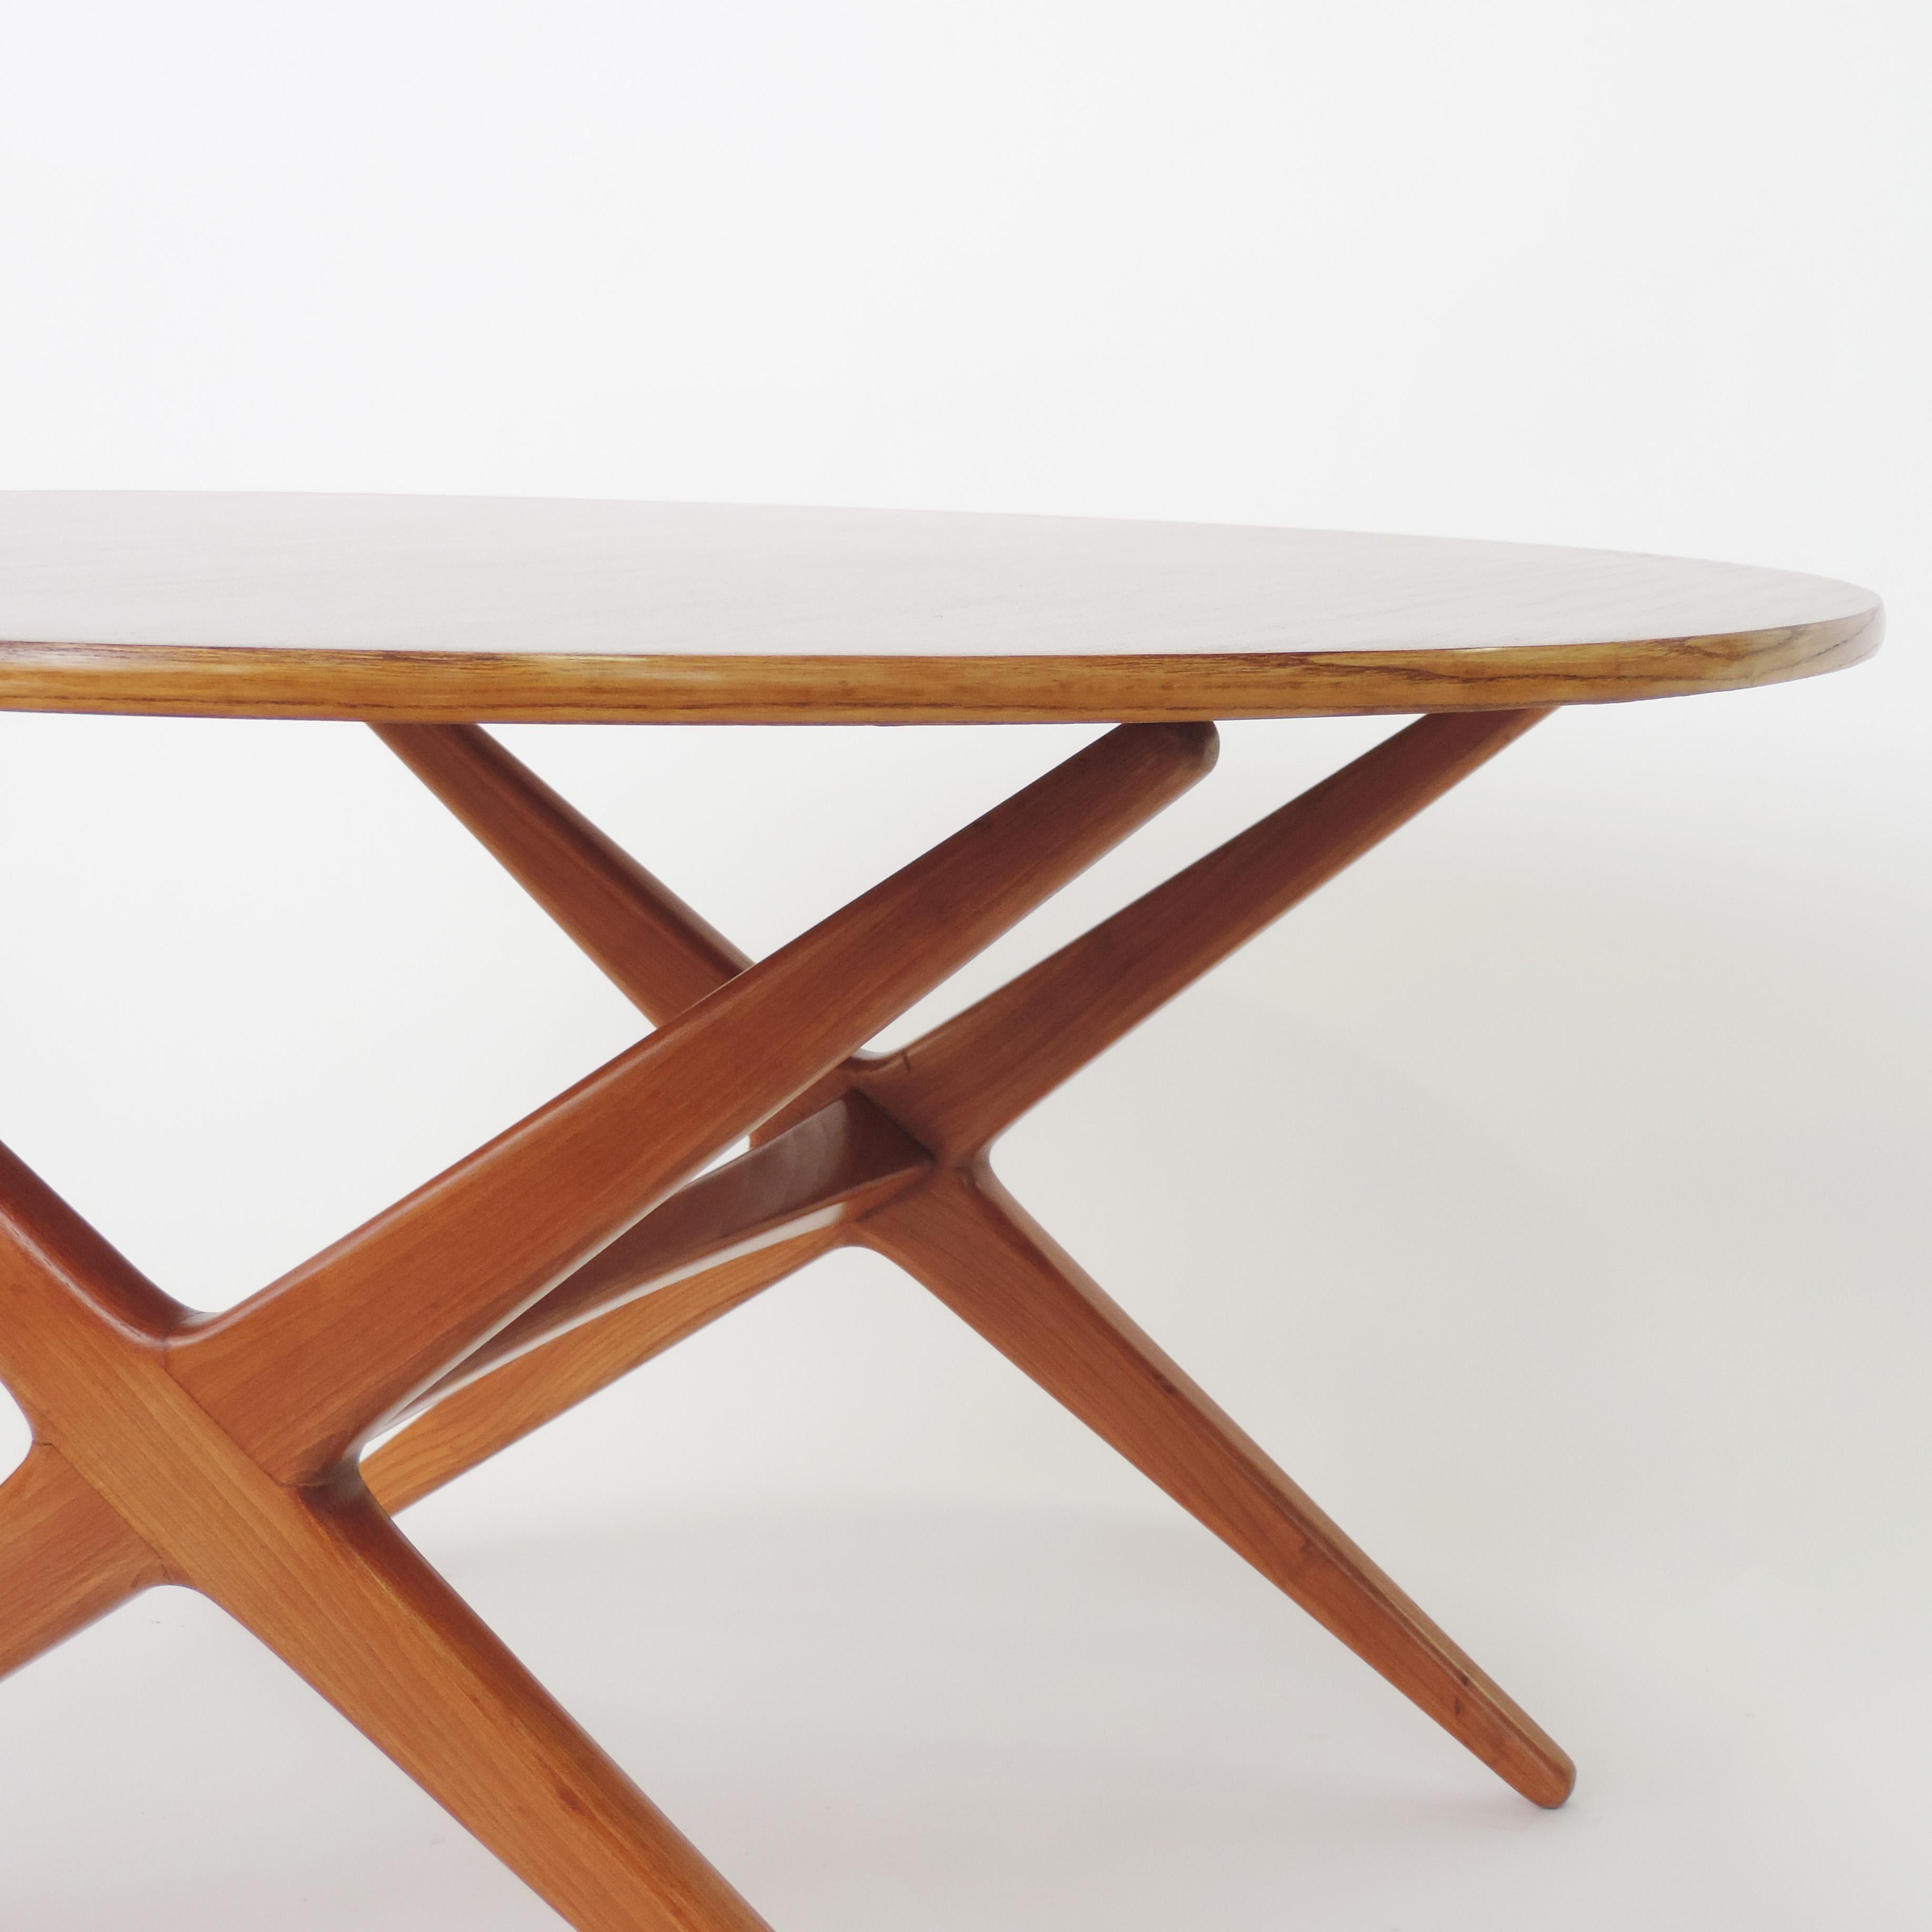 Italian 1950s adjustable dining / coffee table attributed to Ico Parisi.
Measures: Diameter 100cm.
Coffee table height 57cm.
Dining table height 73cm.